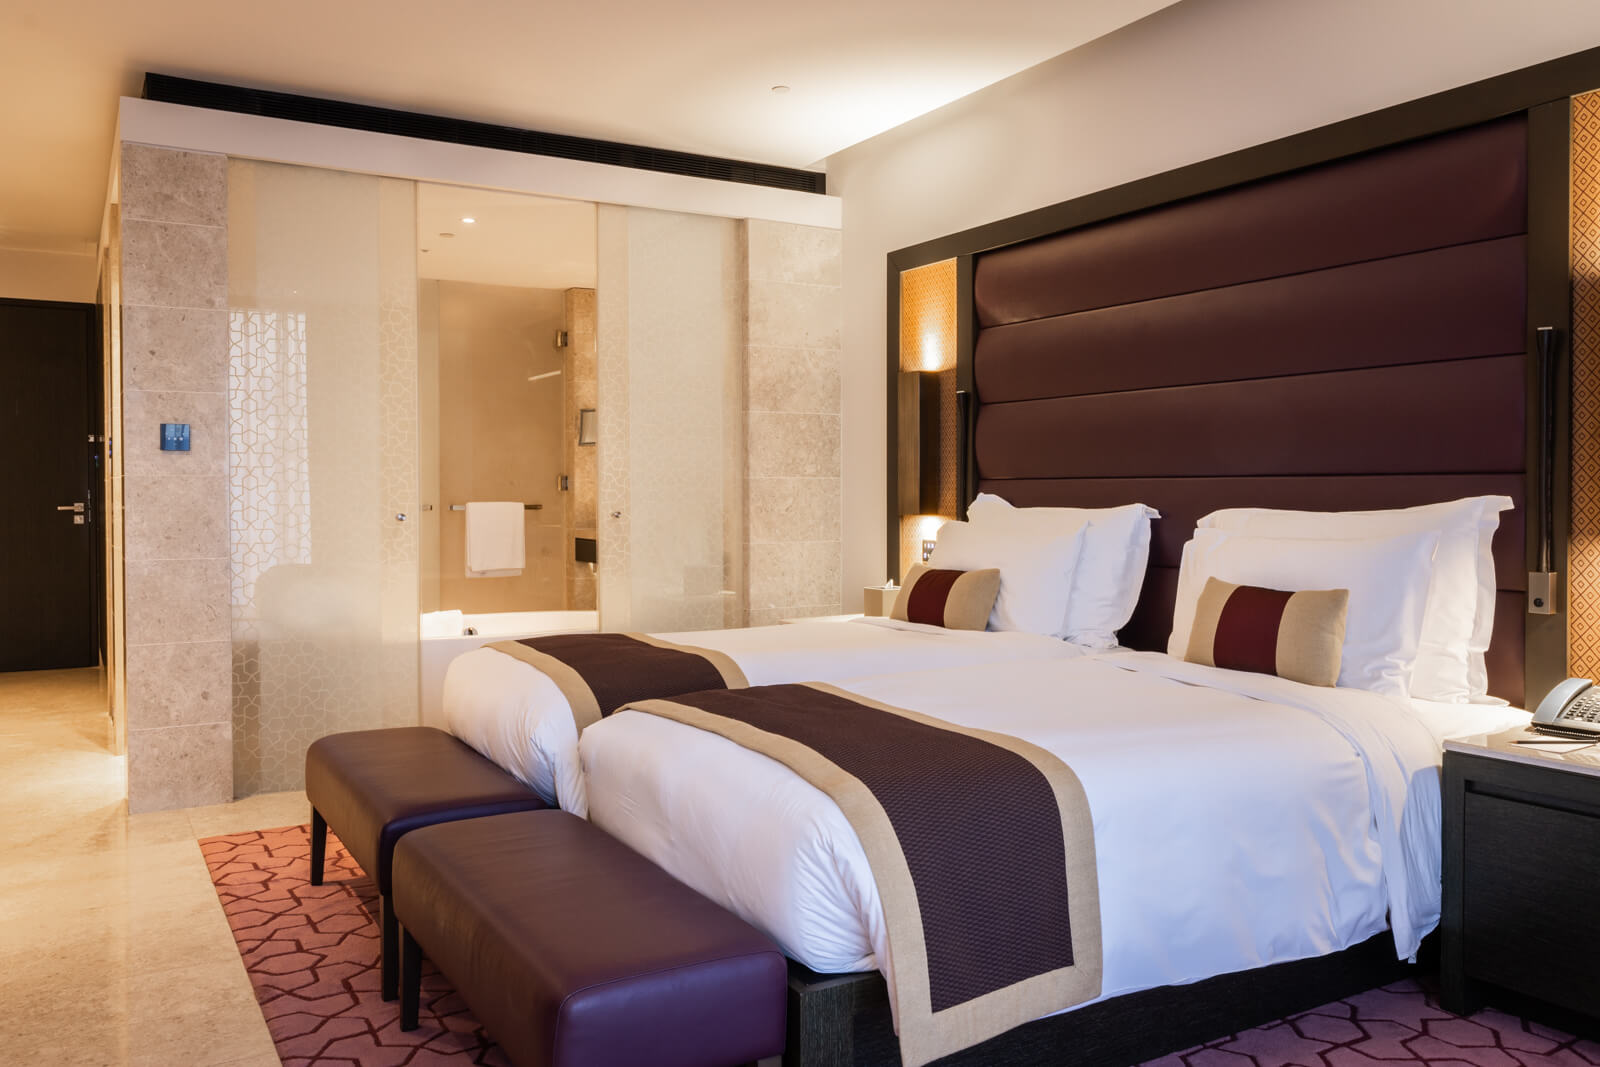 Hotelfoto van kamer in Kempinski hotel in Muscat